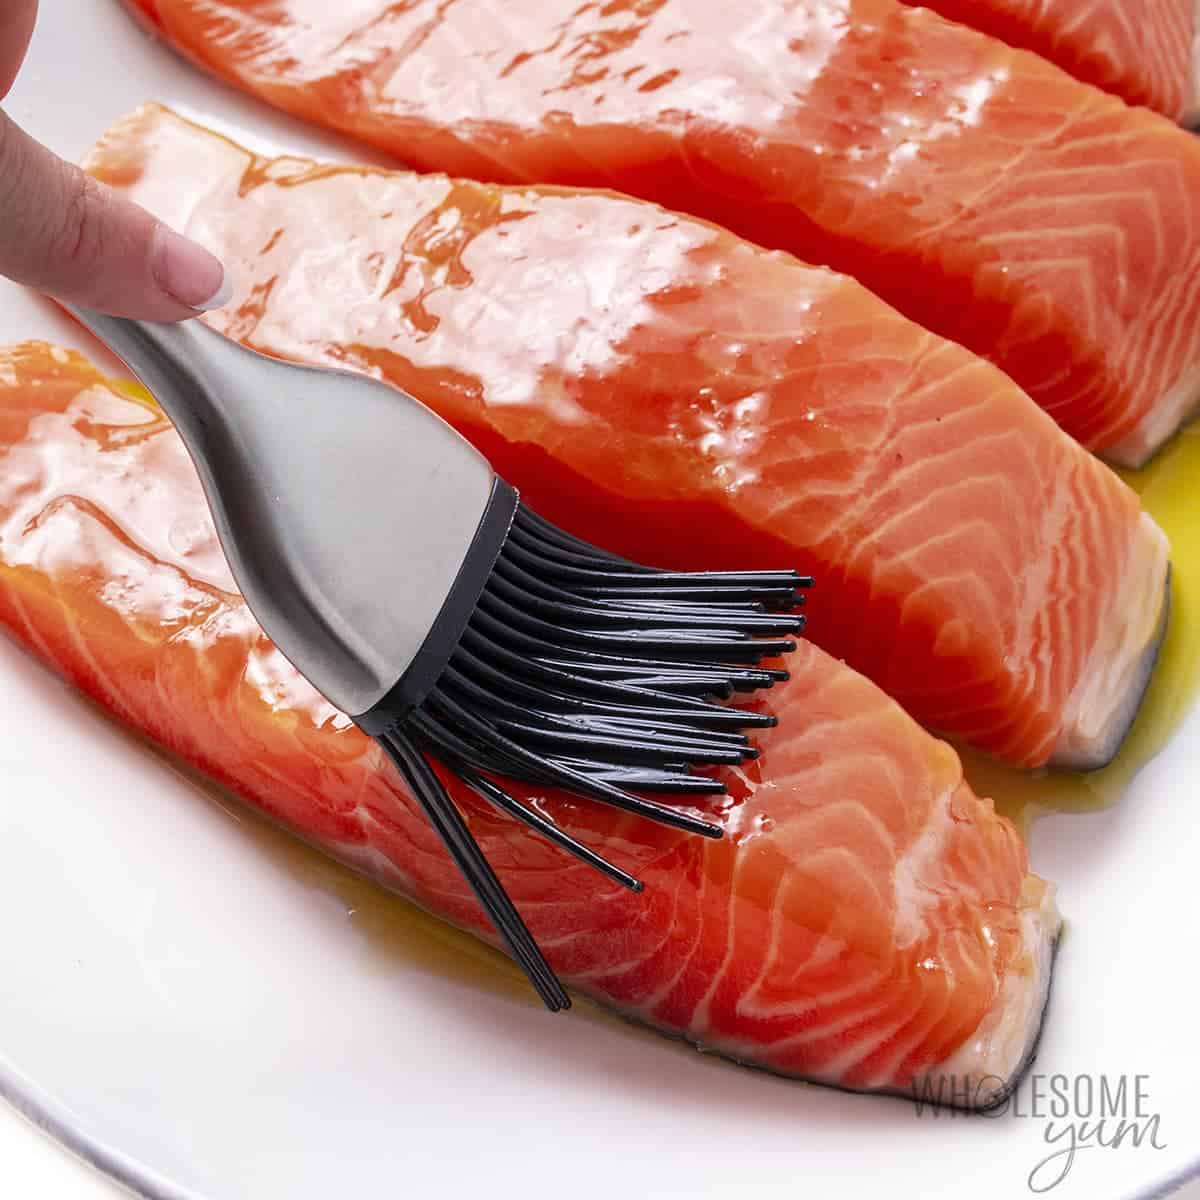 Brushing olive oil over salmon fillets